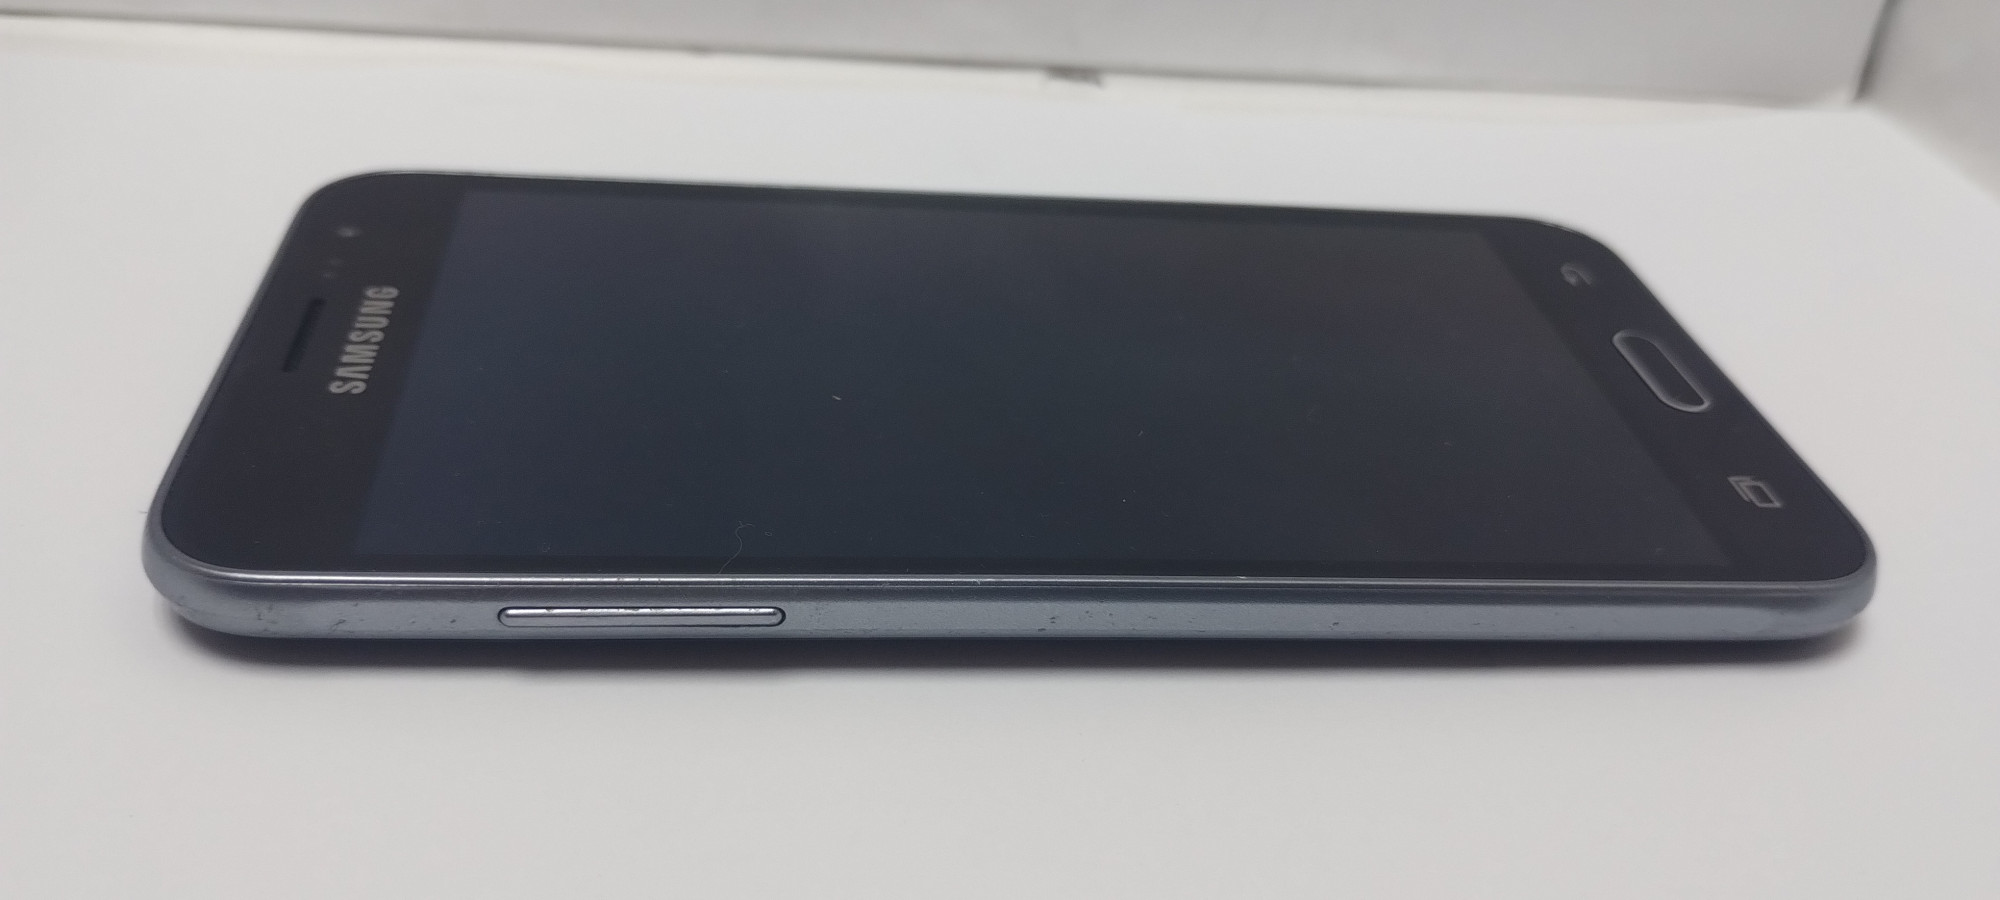 Samsung Galaxy J3 2016 Black (SM-J320H) 1/8Gb 2